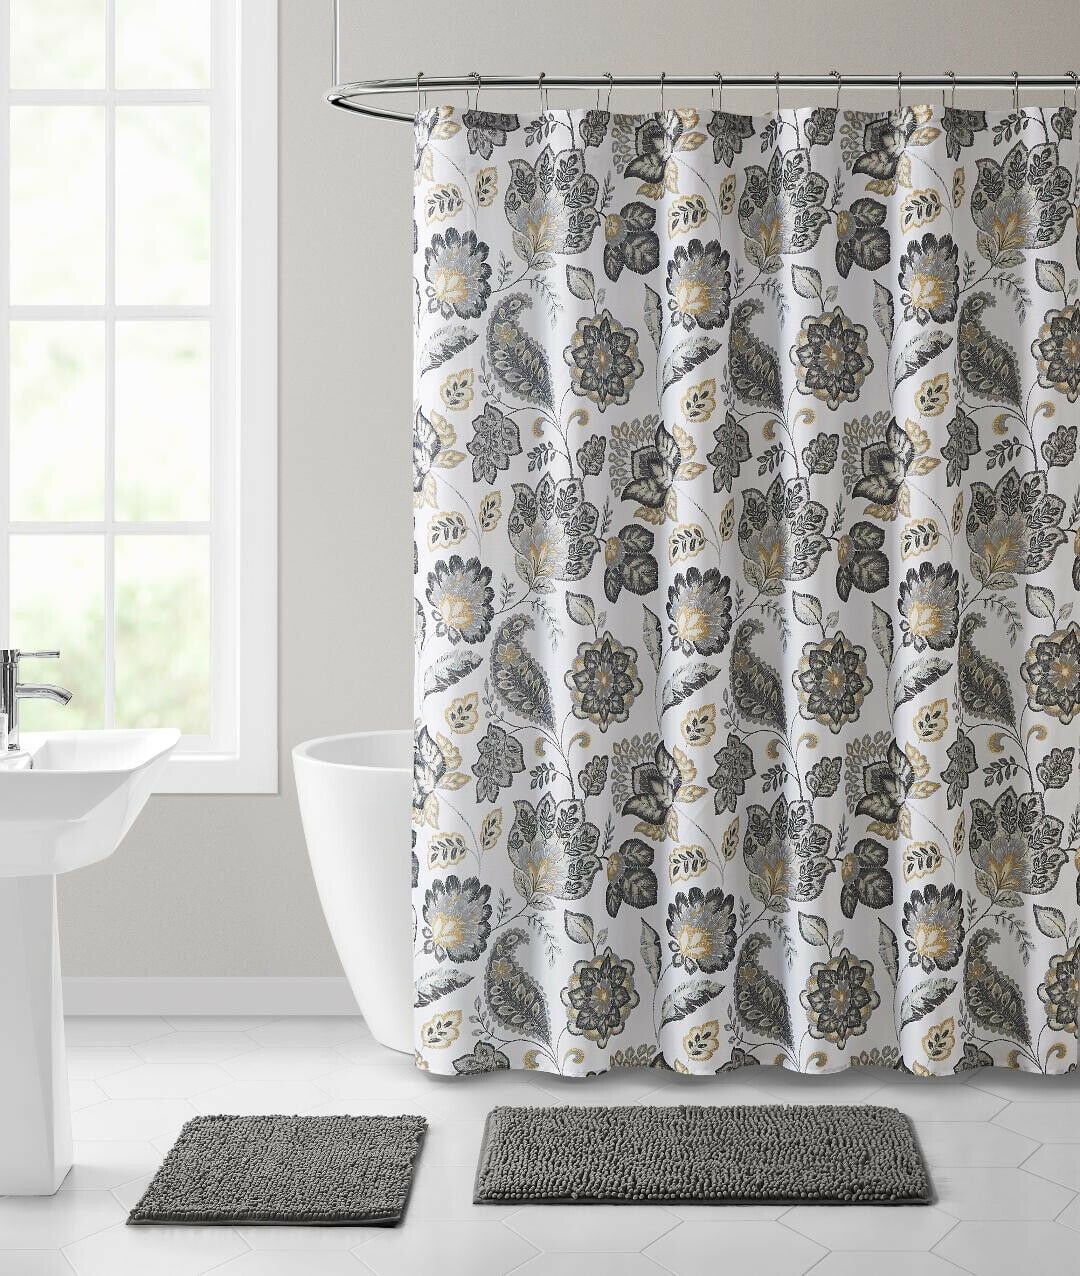 Paisley Ethnic Flower Bathroom Waterproof Fabric Shower Curtain Hooks Mat 60/72" 